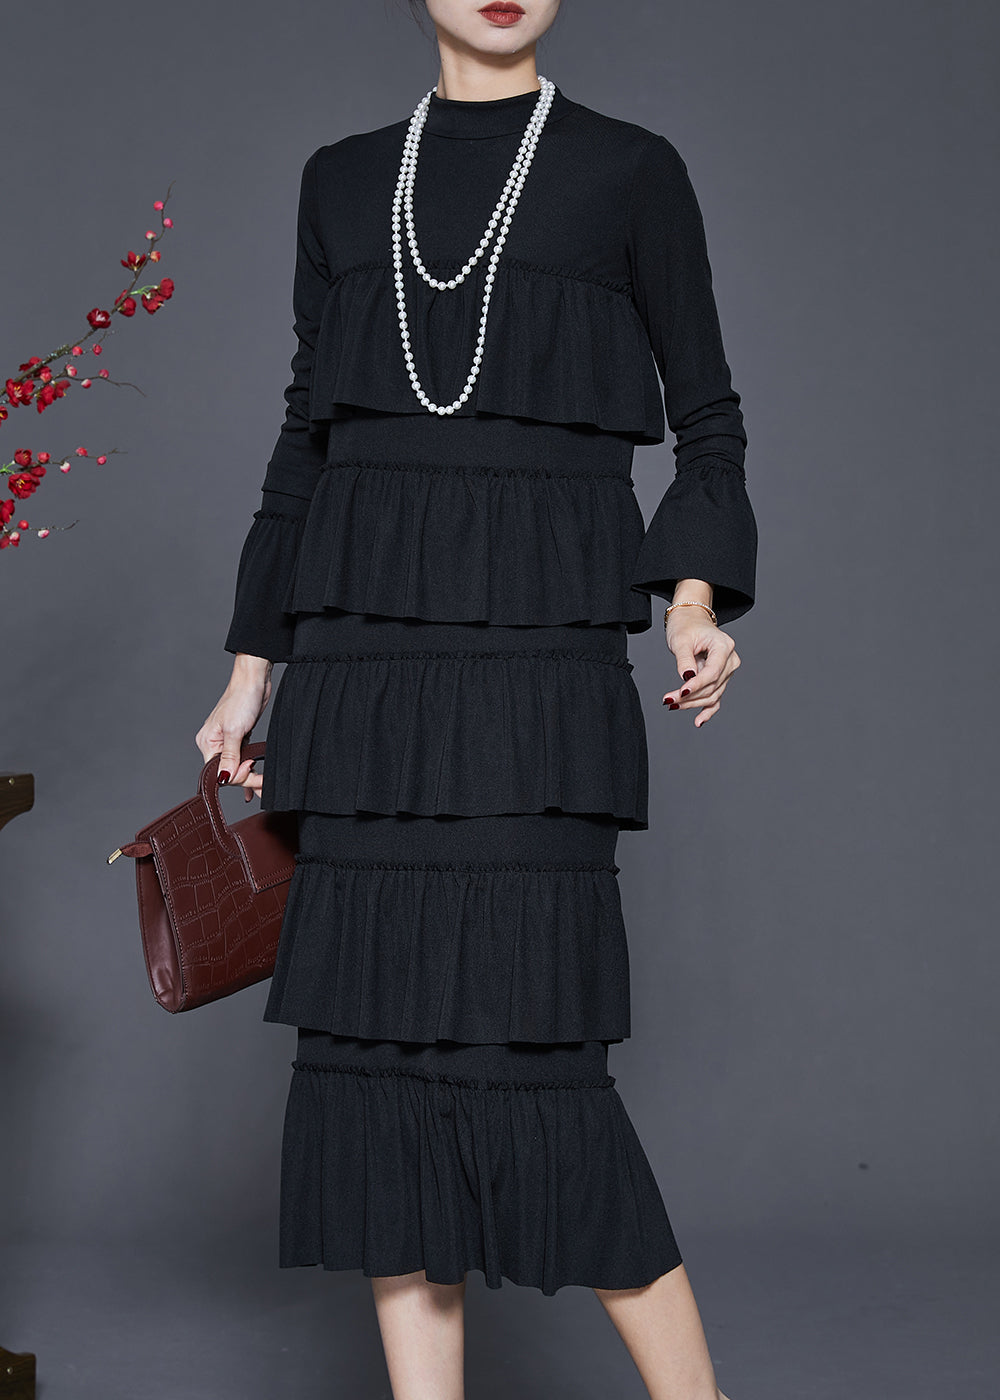 Modern Black Layered Ruffles Silm Fit Cotton Dress Spring